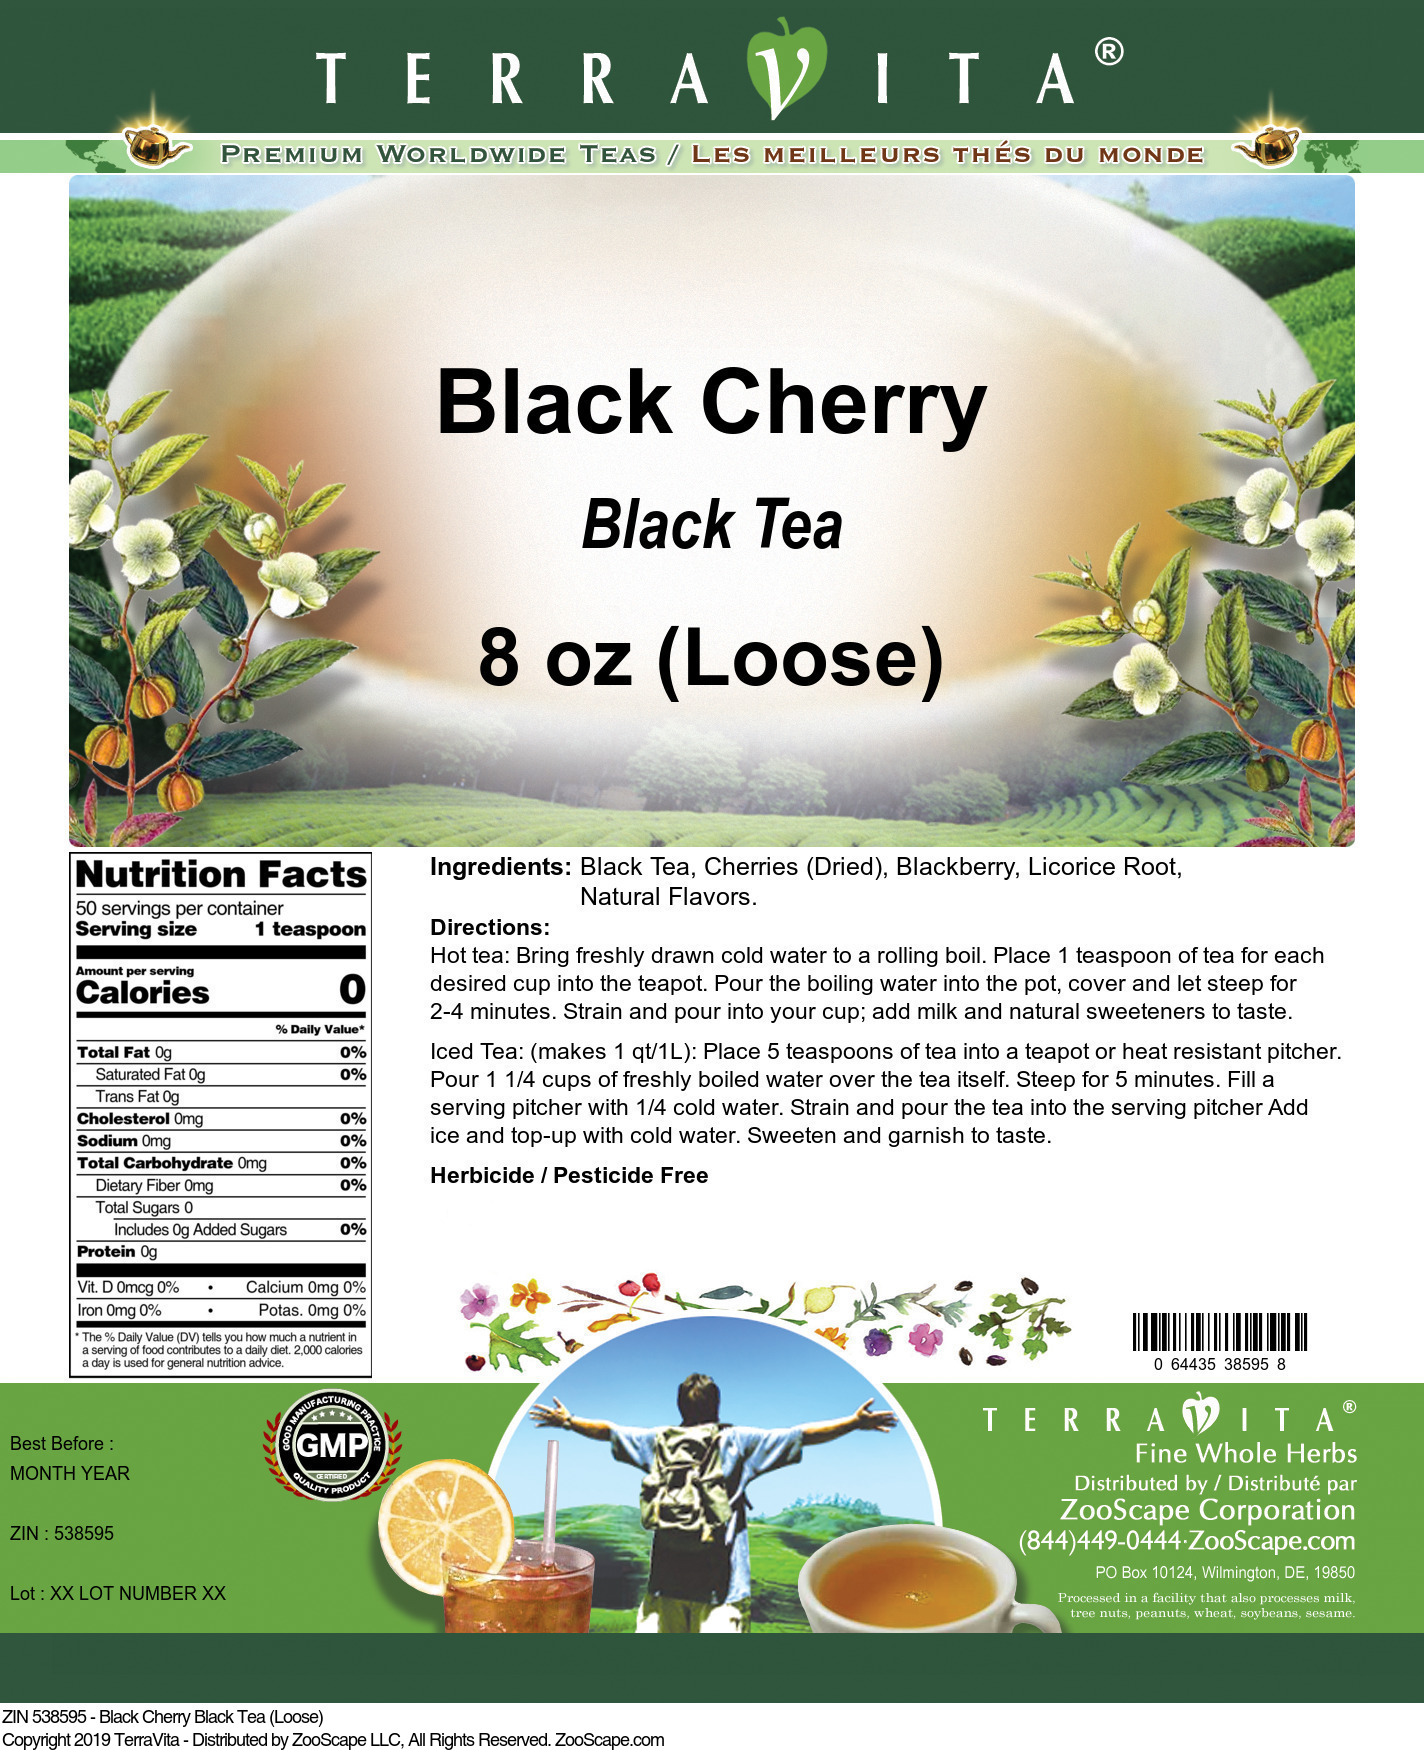 Black Cherry Black Tea (Loose) - Label